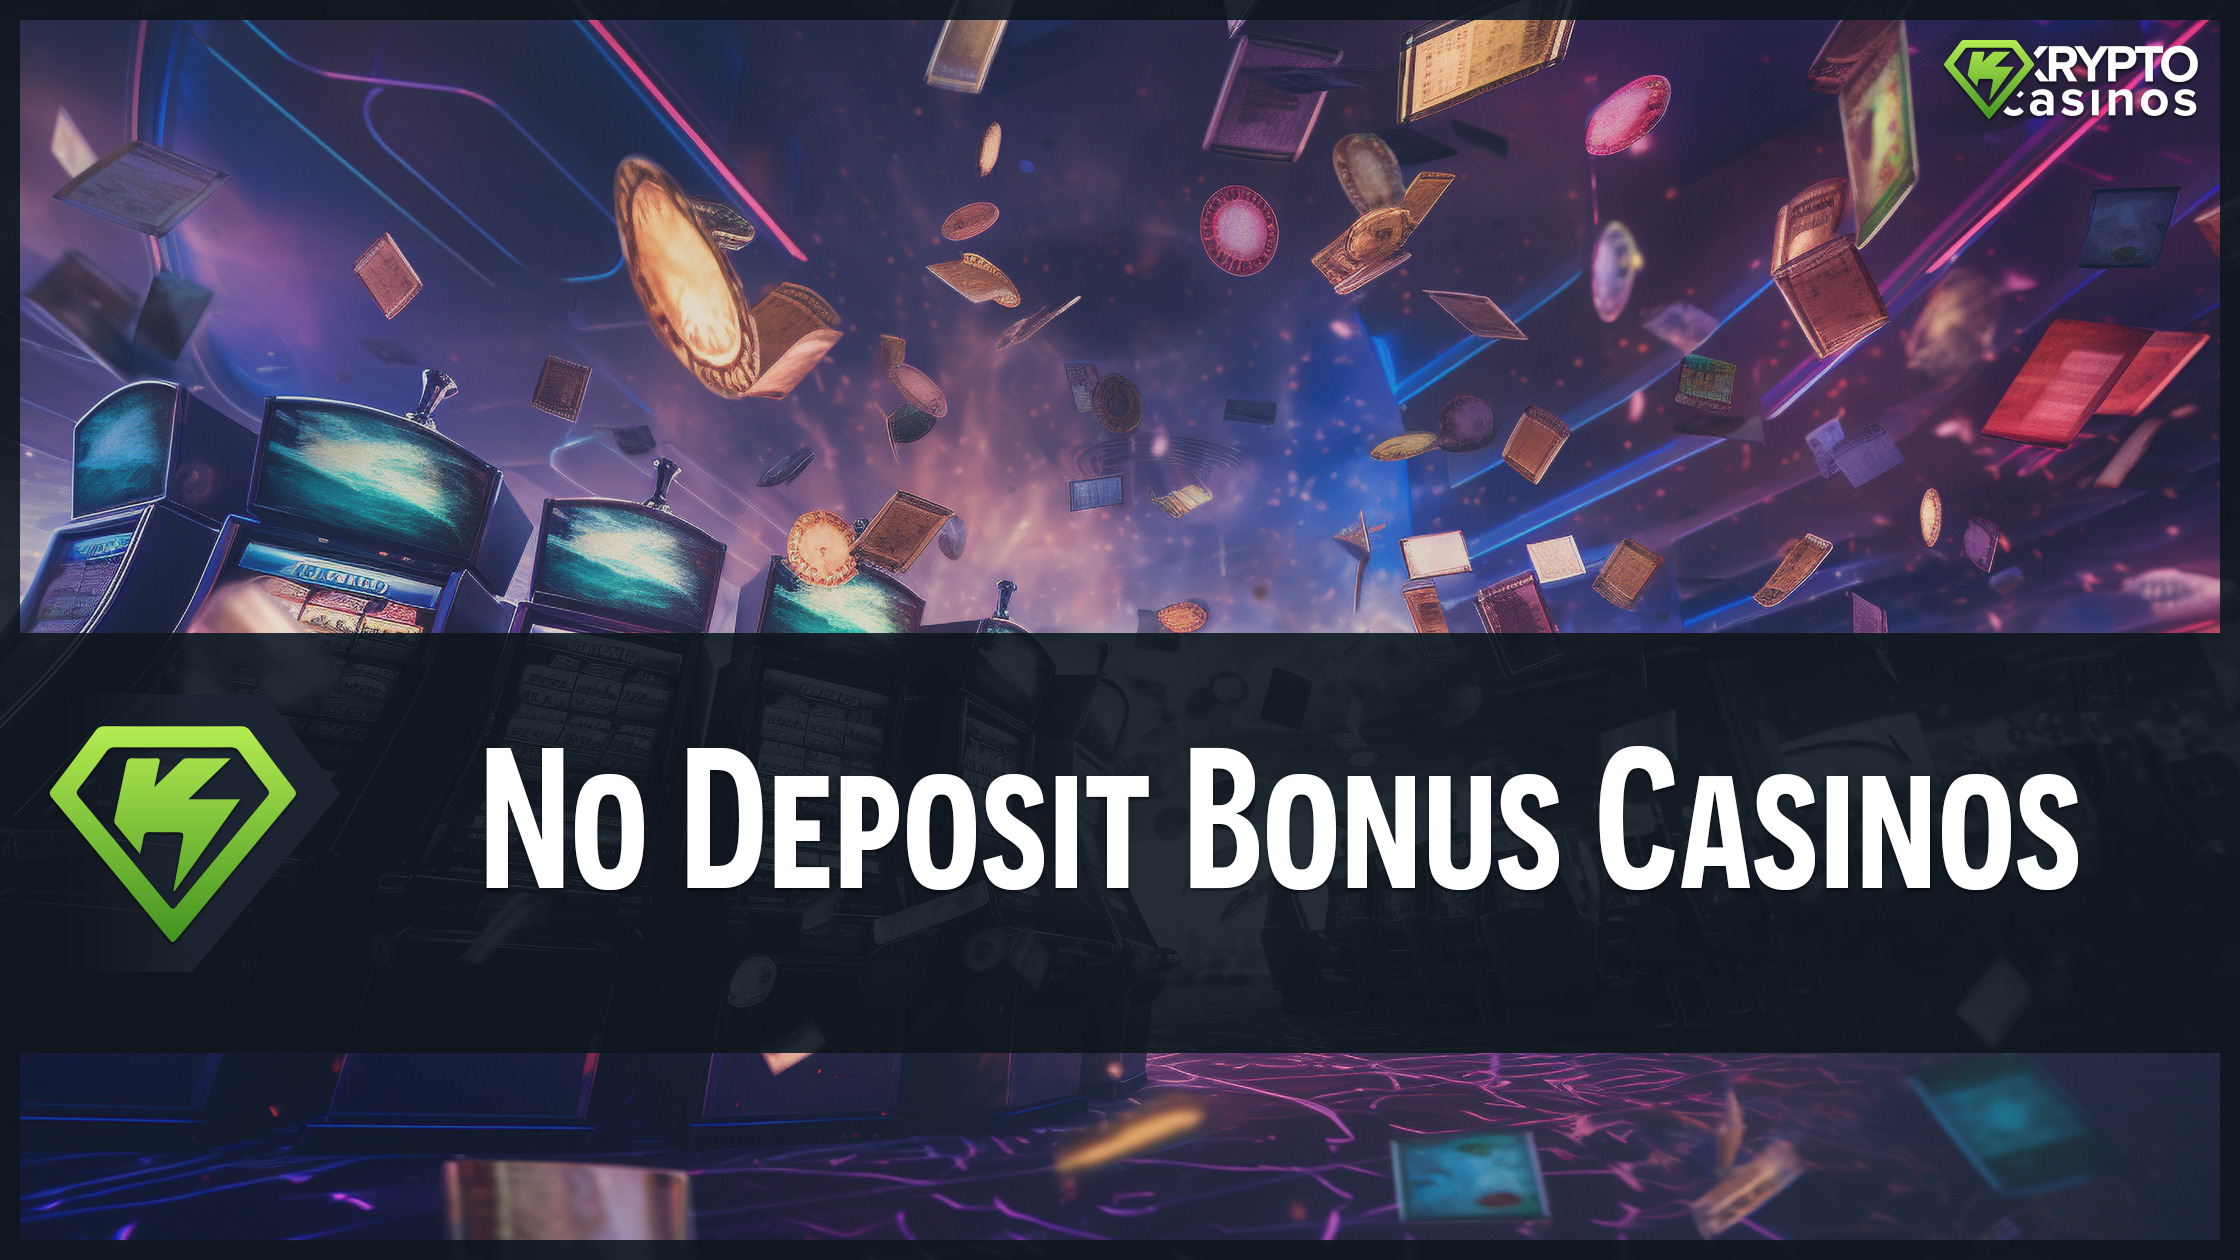 Club Player Casino – 25 No Deposit Free Spins Bonus Code on Hyper Wins